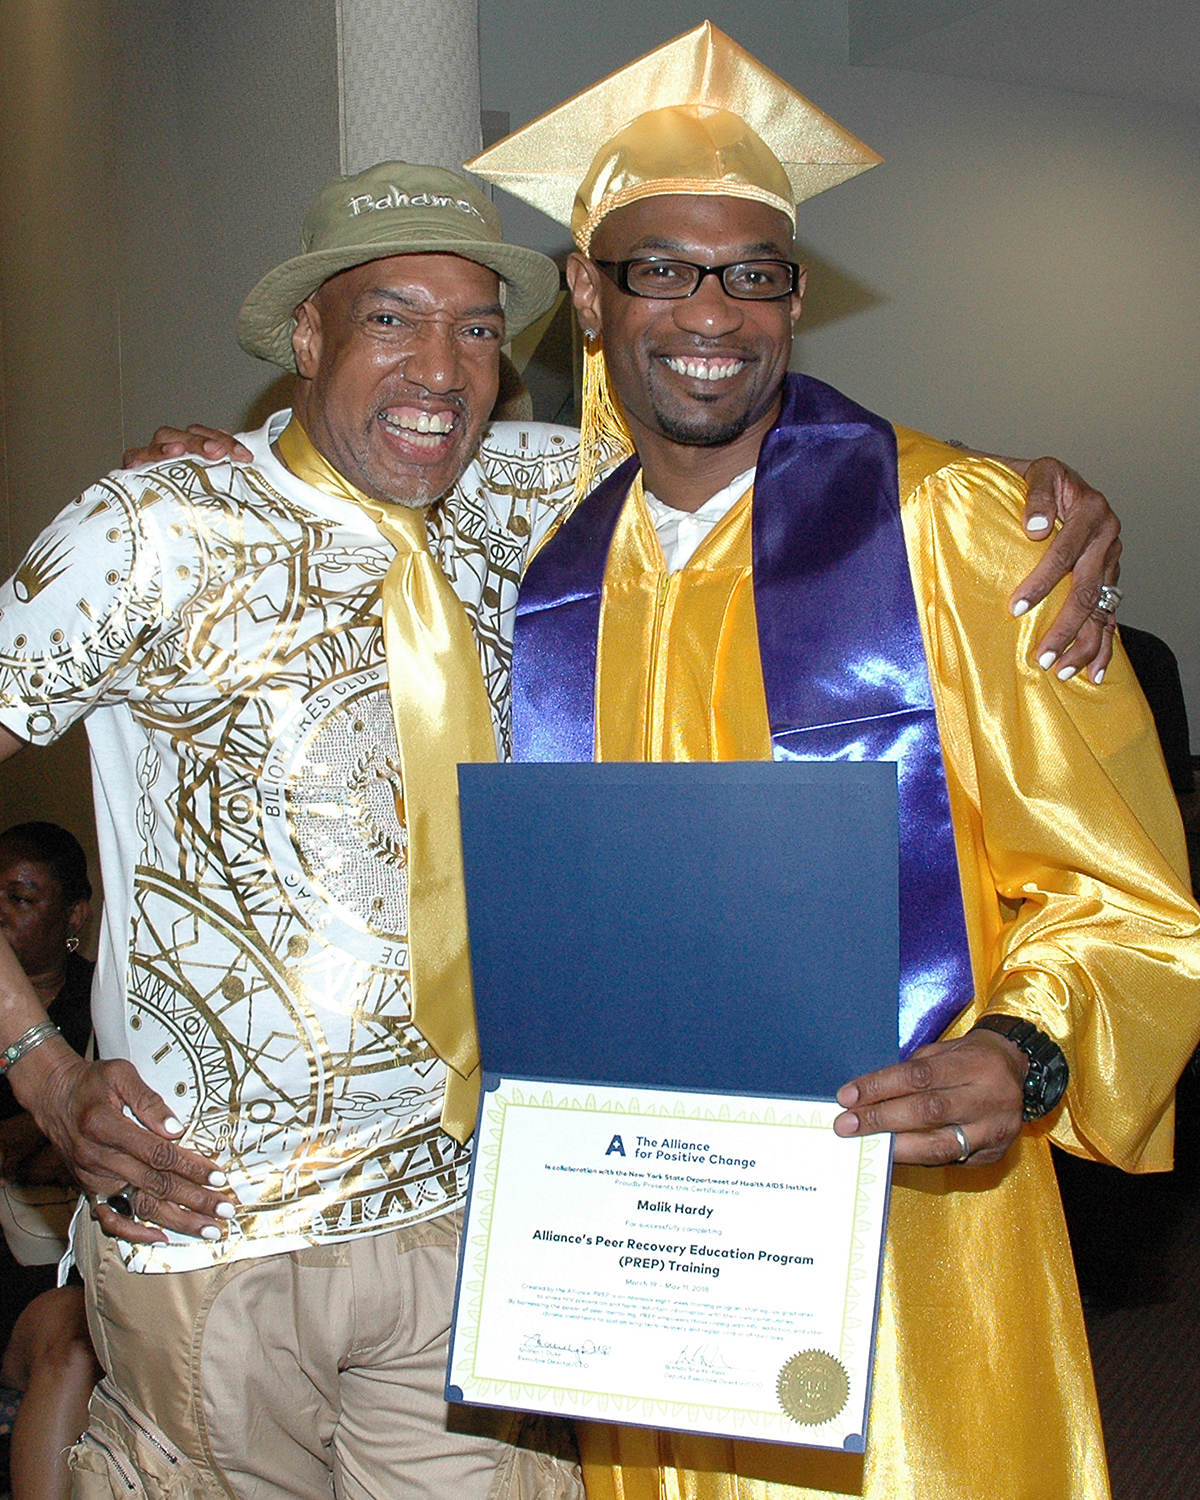 Thomas P. and Malik H. with Malik's certificate